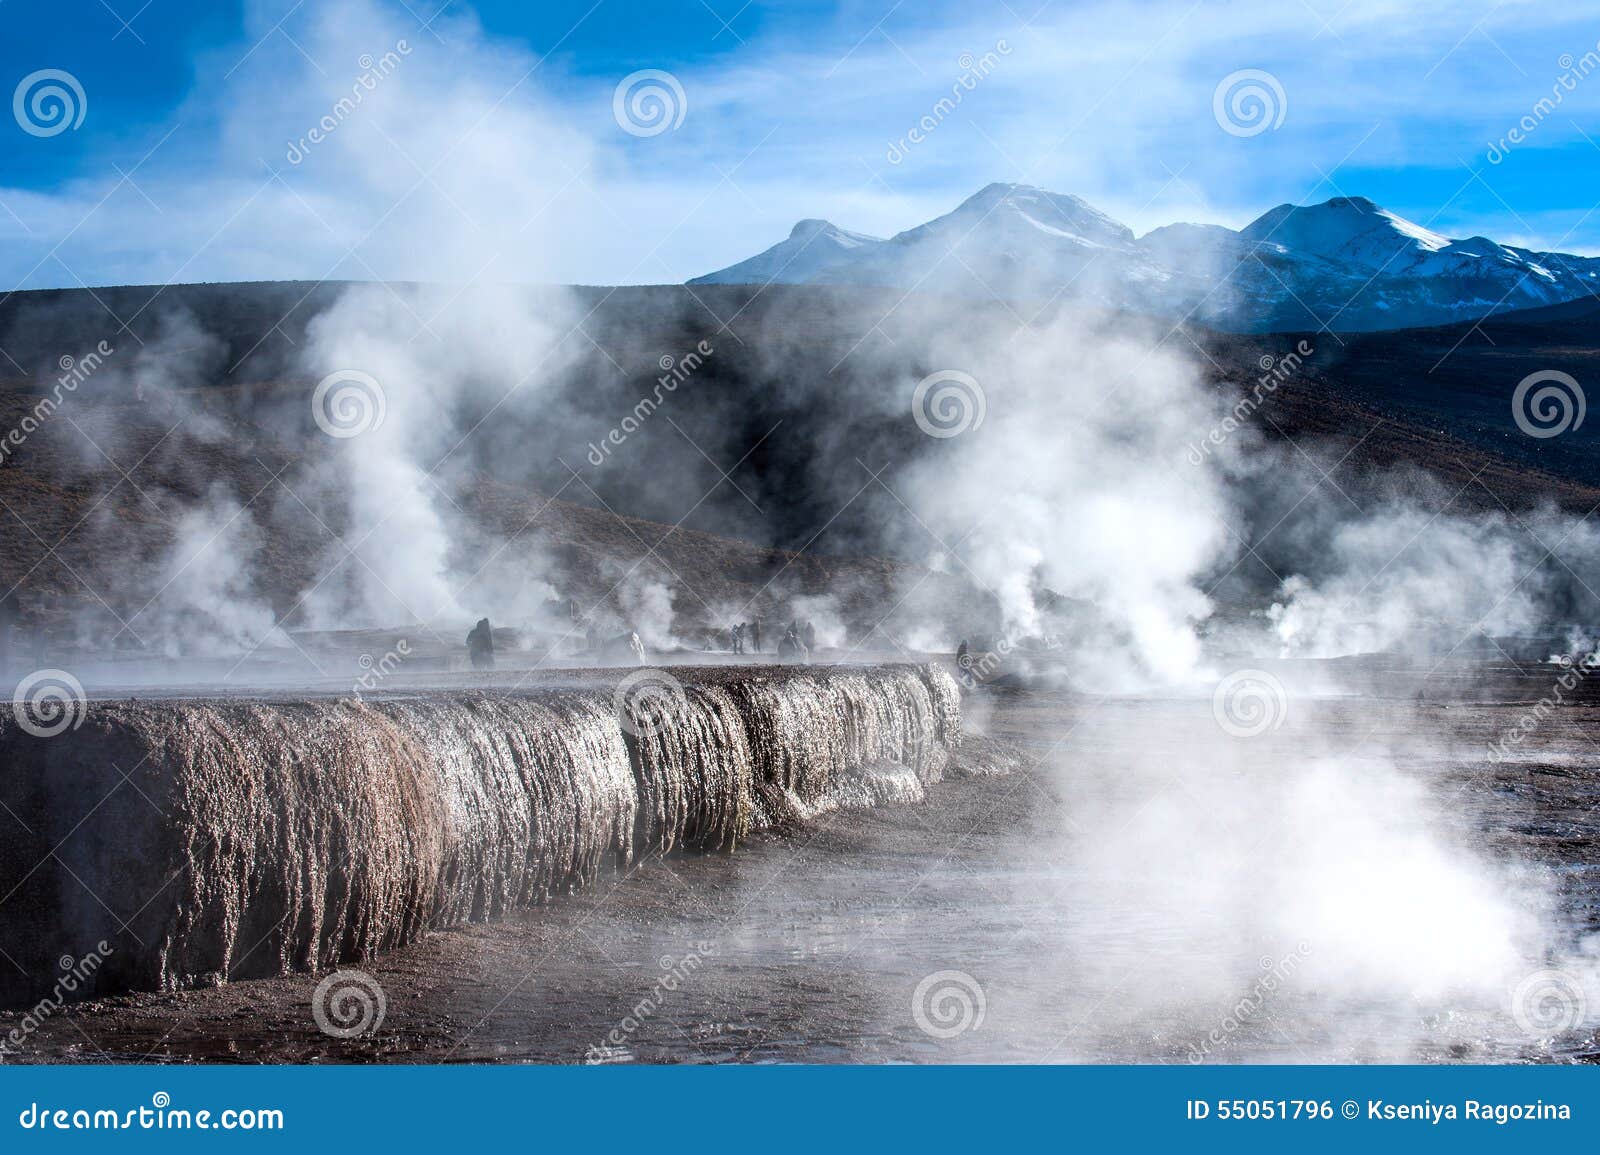 valley of geysers in the atacama